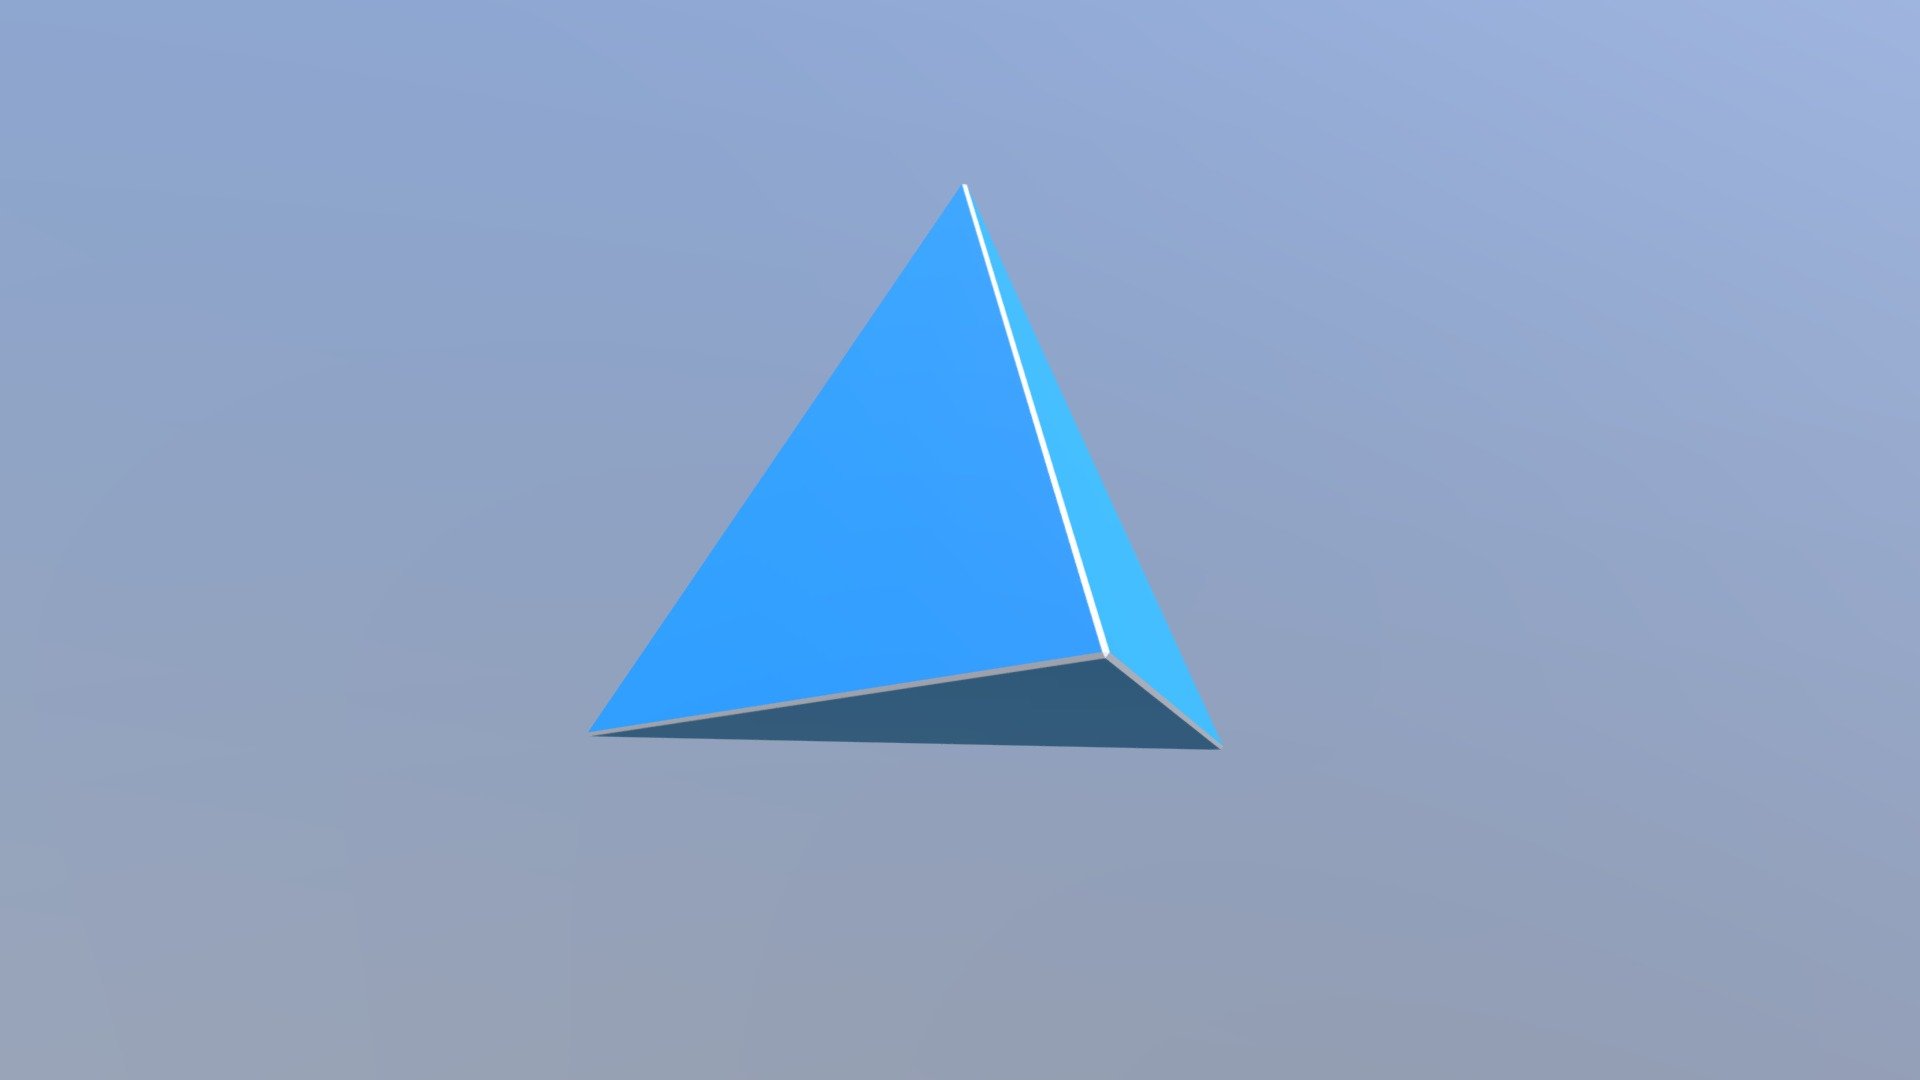 net for triangular pyramid